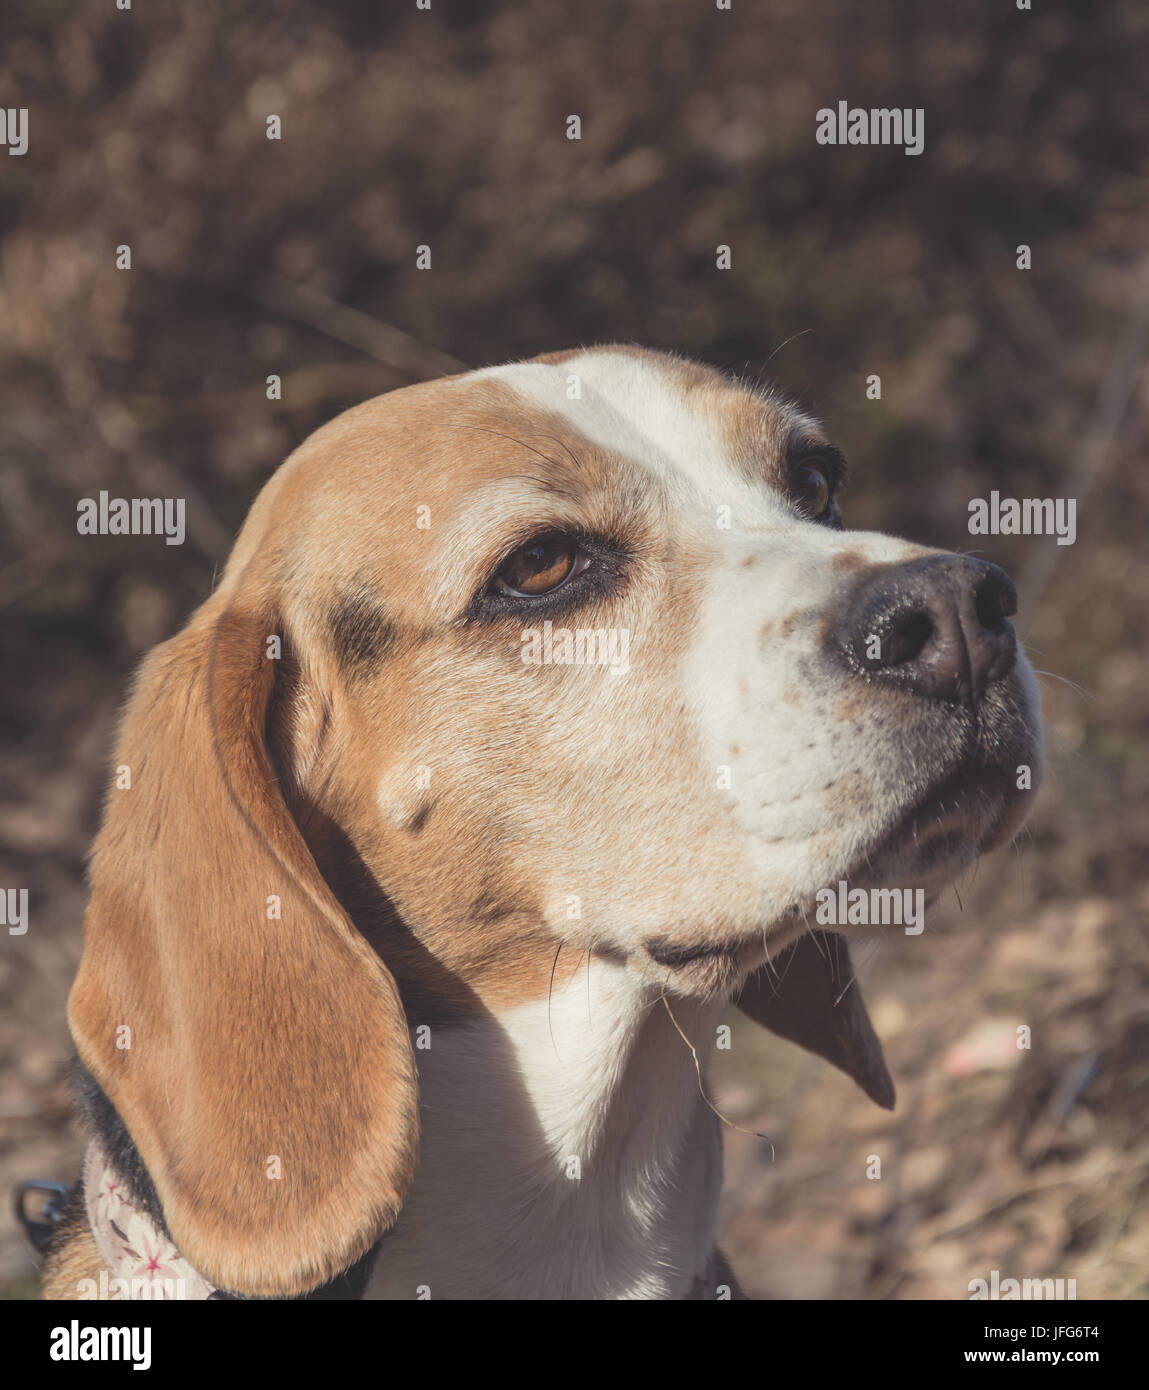 beagle dog portrait Stock Photo